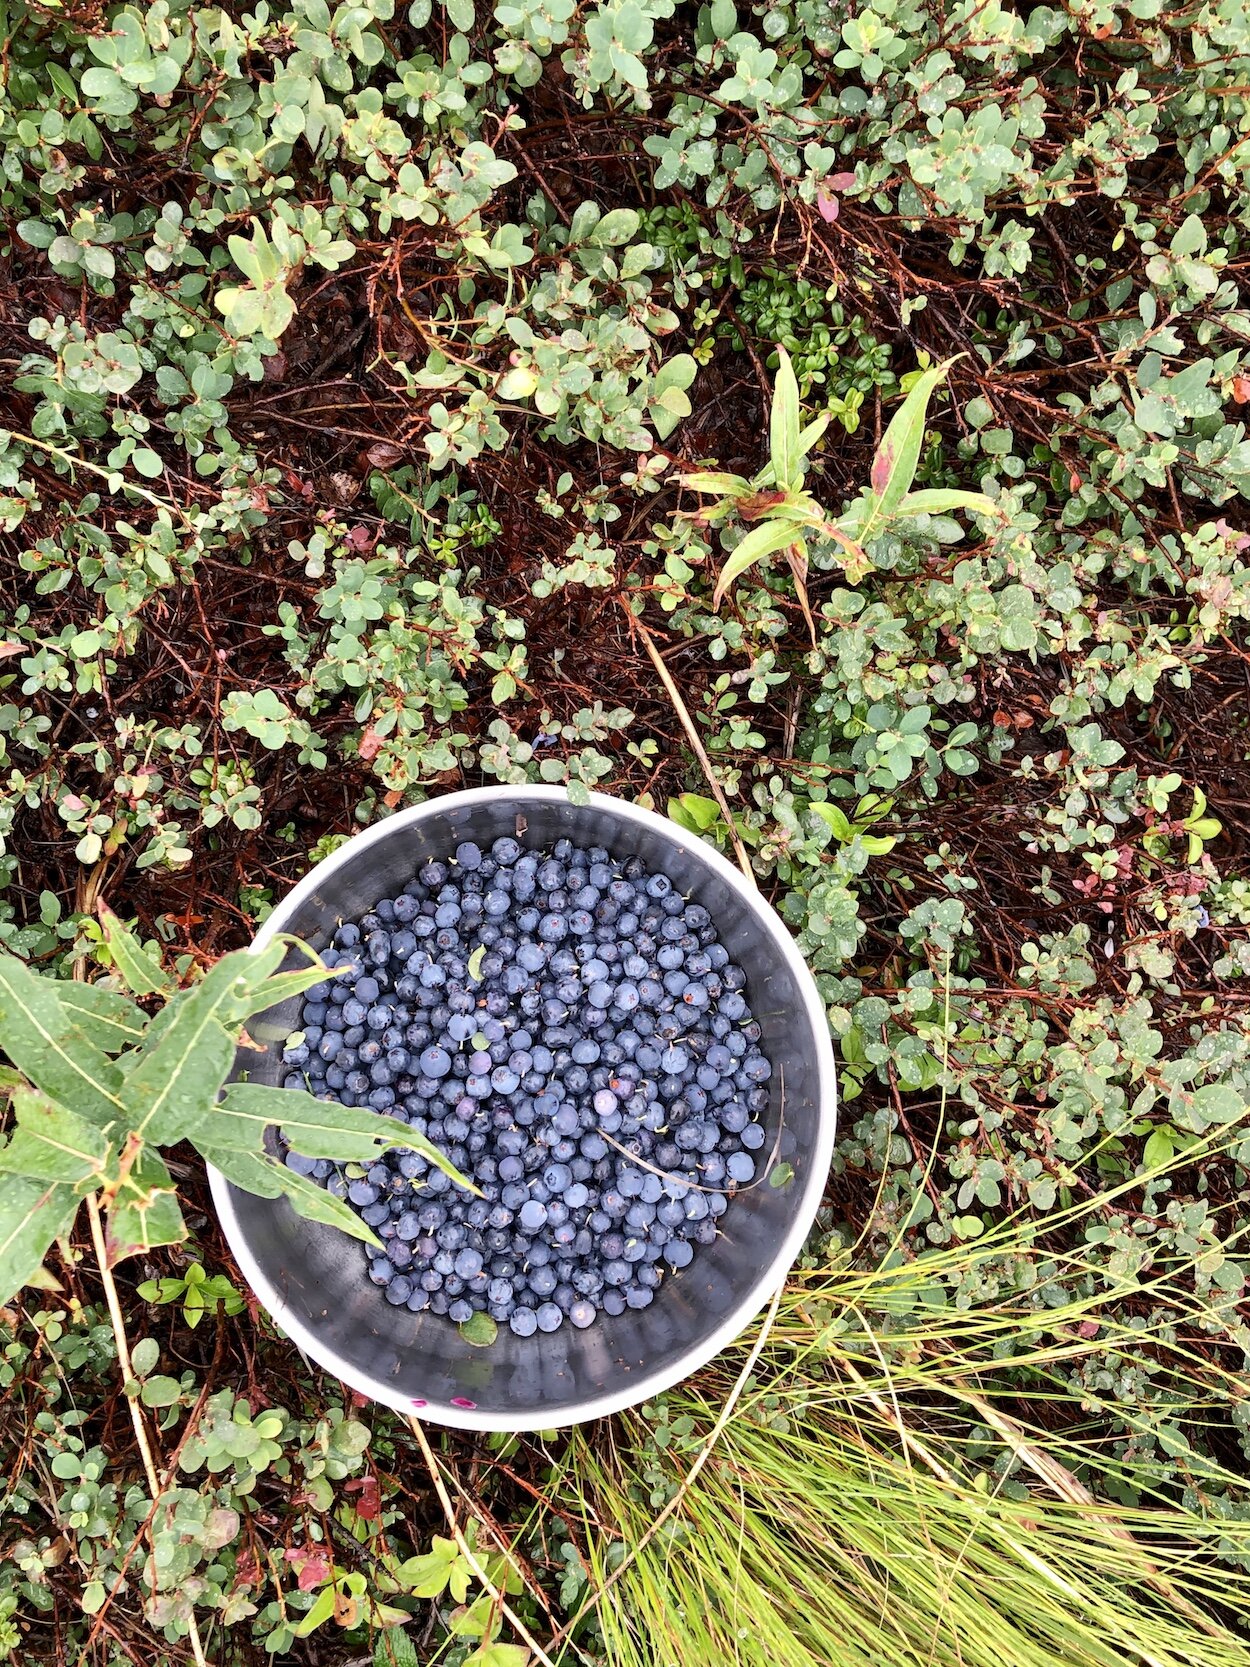 Wild Alaska blueberries